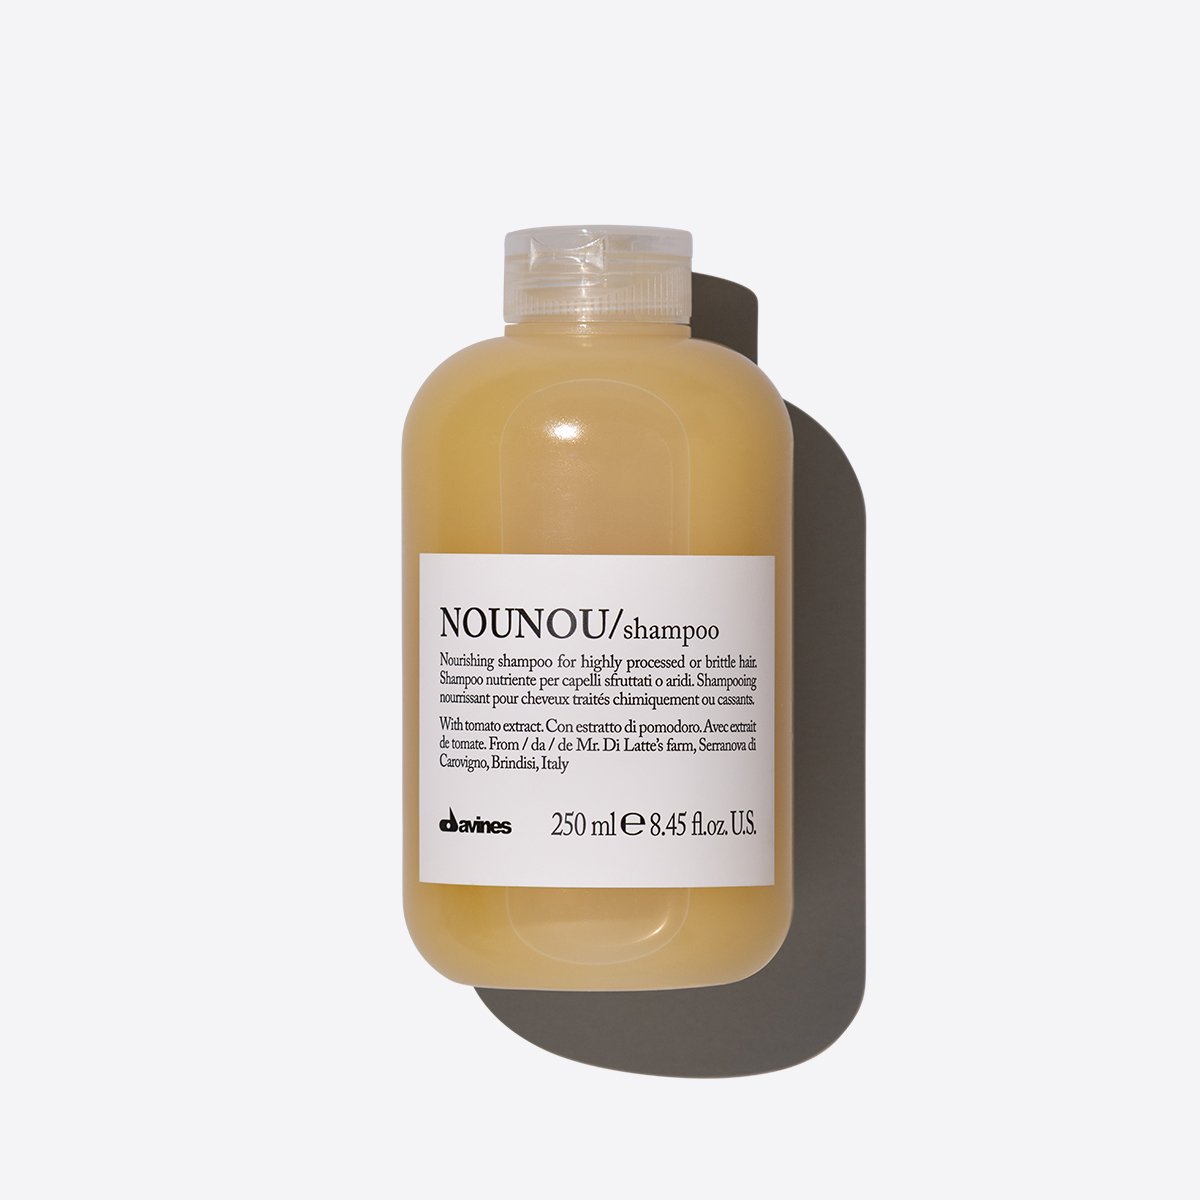 NOUNOU Shampoo 1  250 ml / 8,45 fl.oz.Davines
